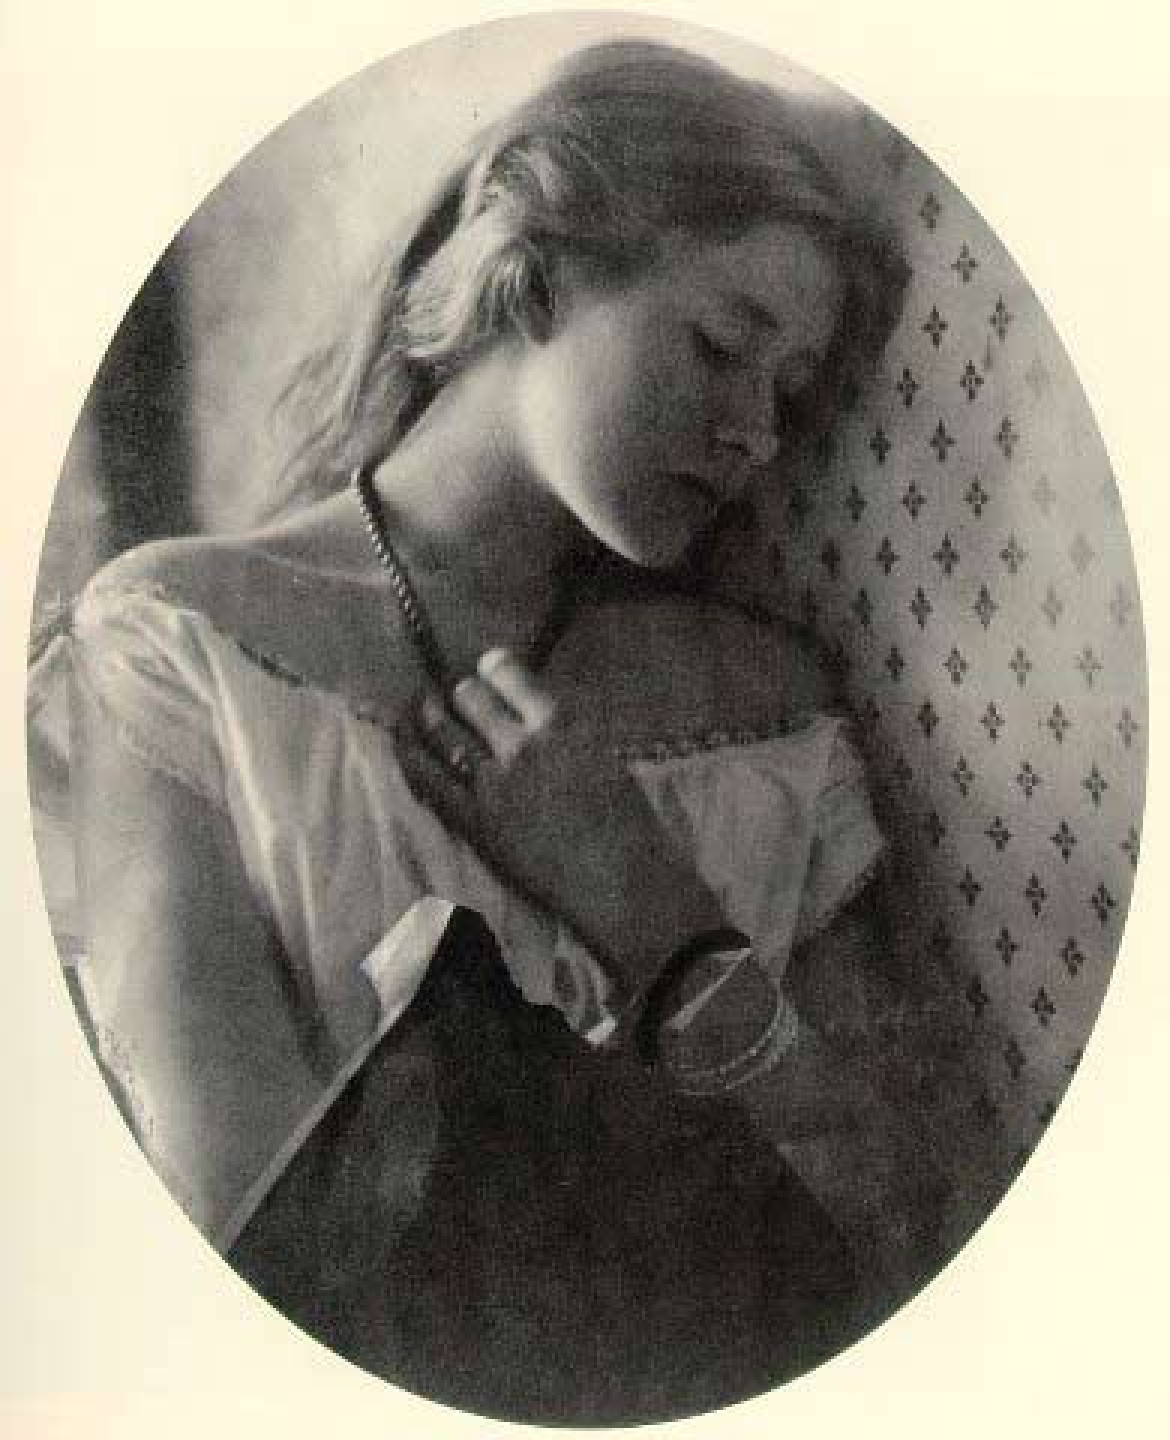 fot. Julia Margaret Cameron "Sadness" 1864 (www.masters-of-photography.com)